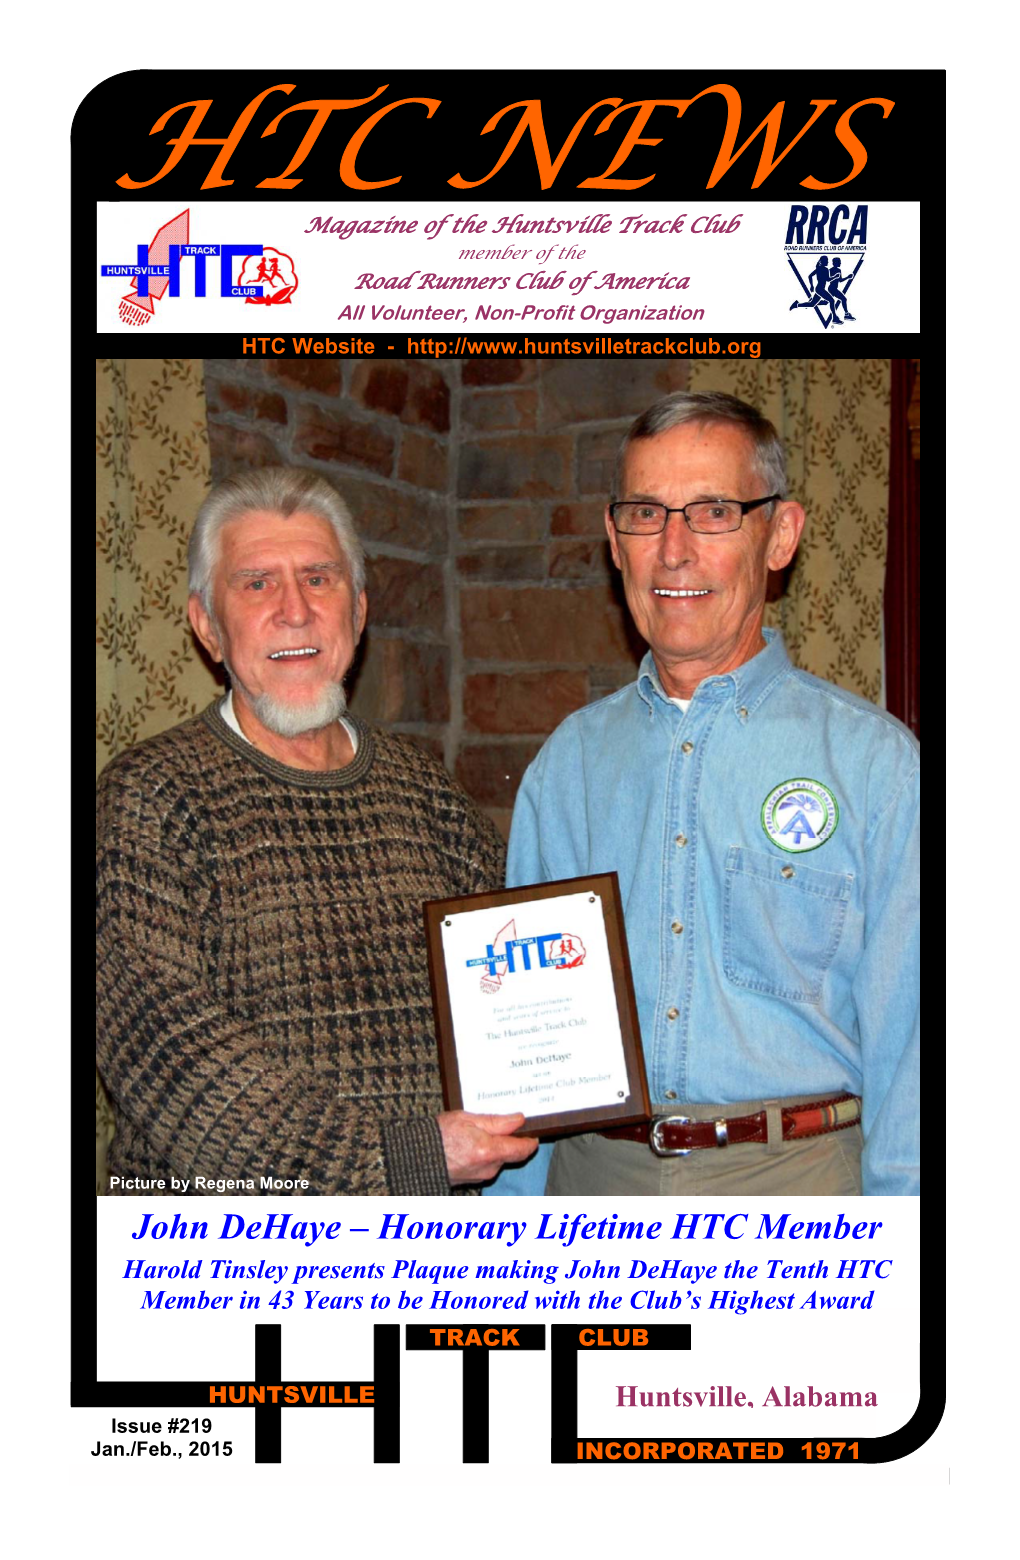 John Dehaye – Honorary Lifetime HTC Member